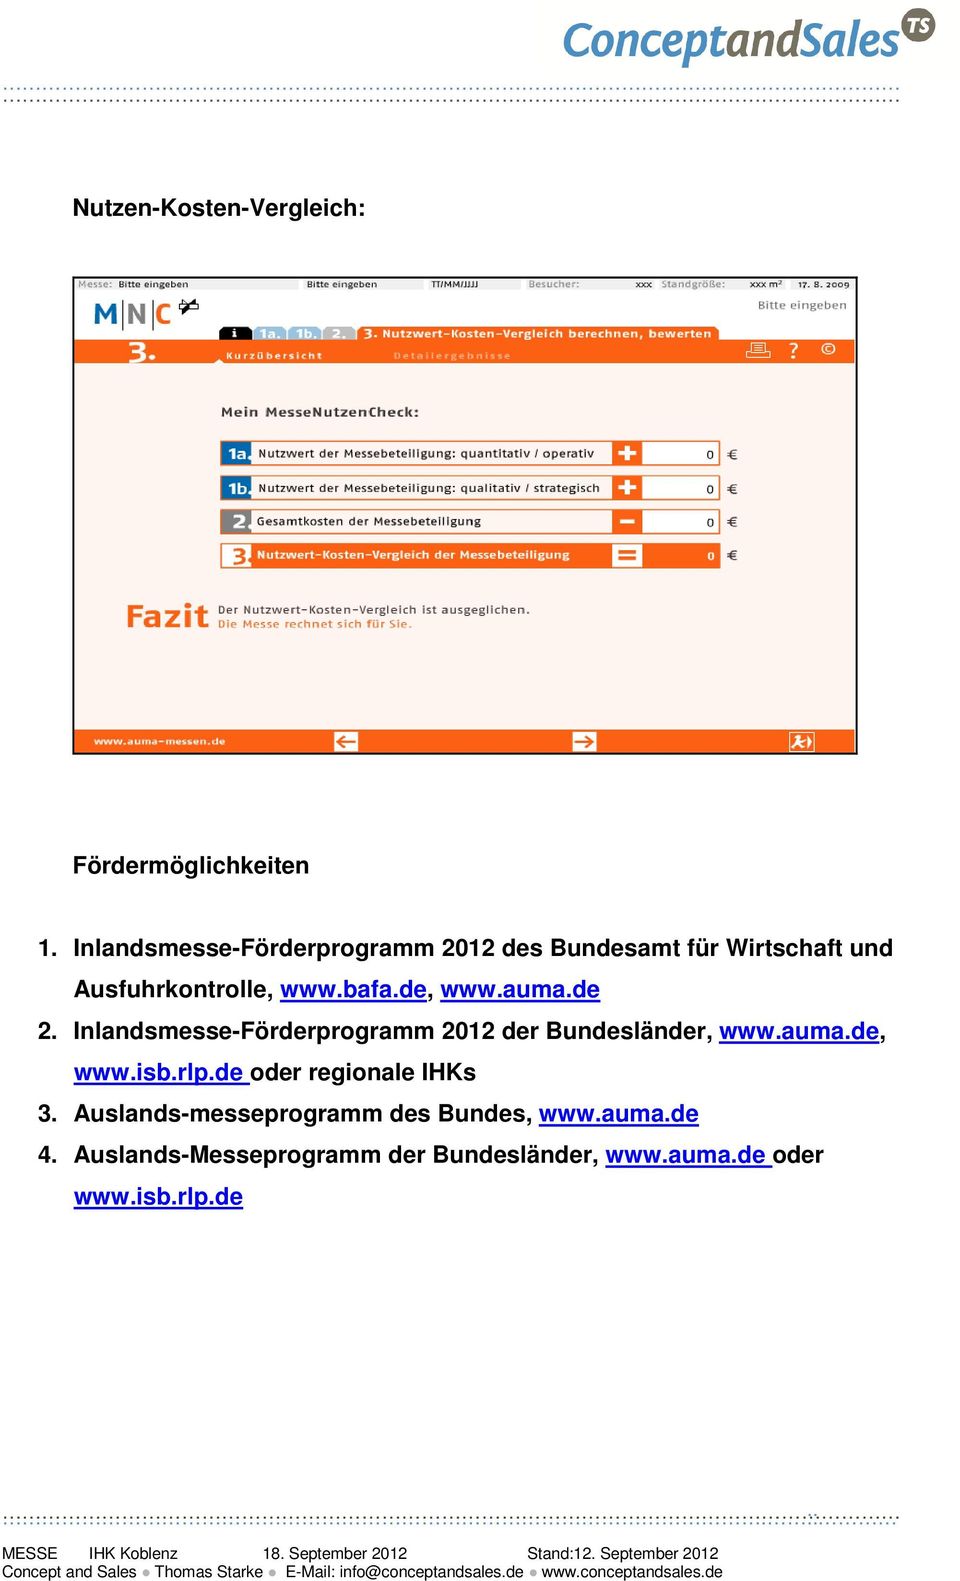 de, www.auma.de 2. Inlandsmesse-Förderprogramm 2012 der Bundesländer, www.auma.de, www.isb.rlp.